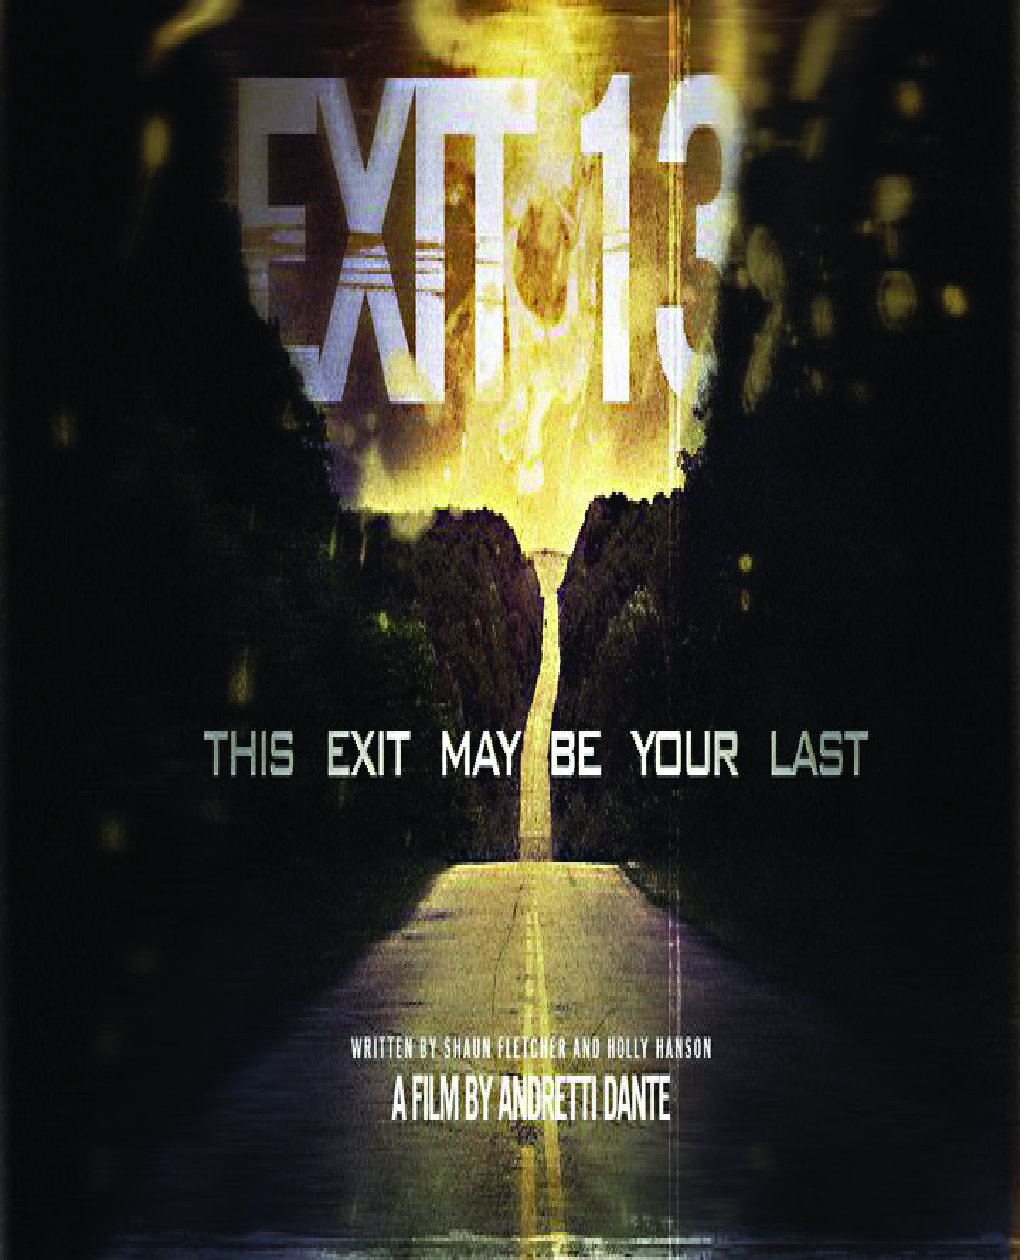 Exit 13